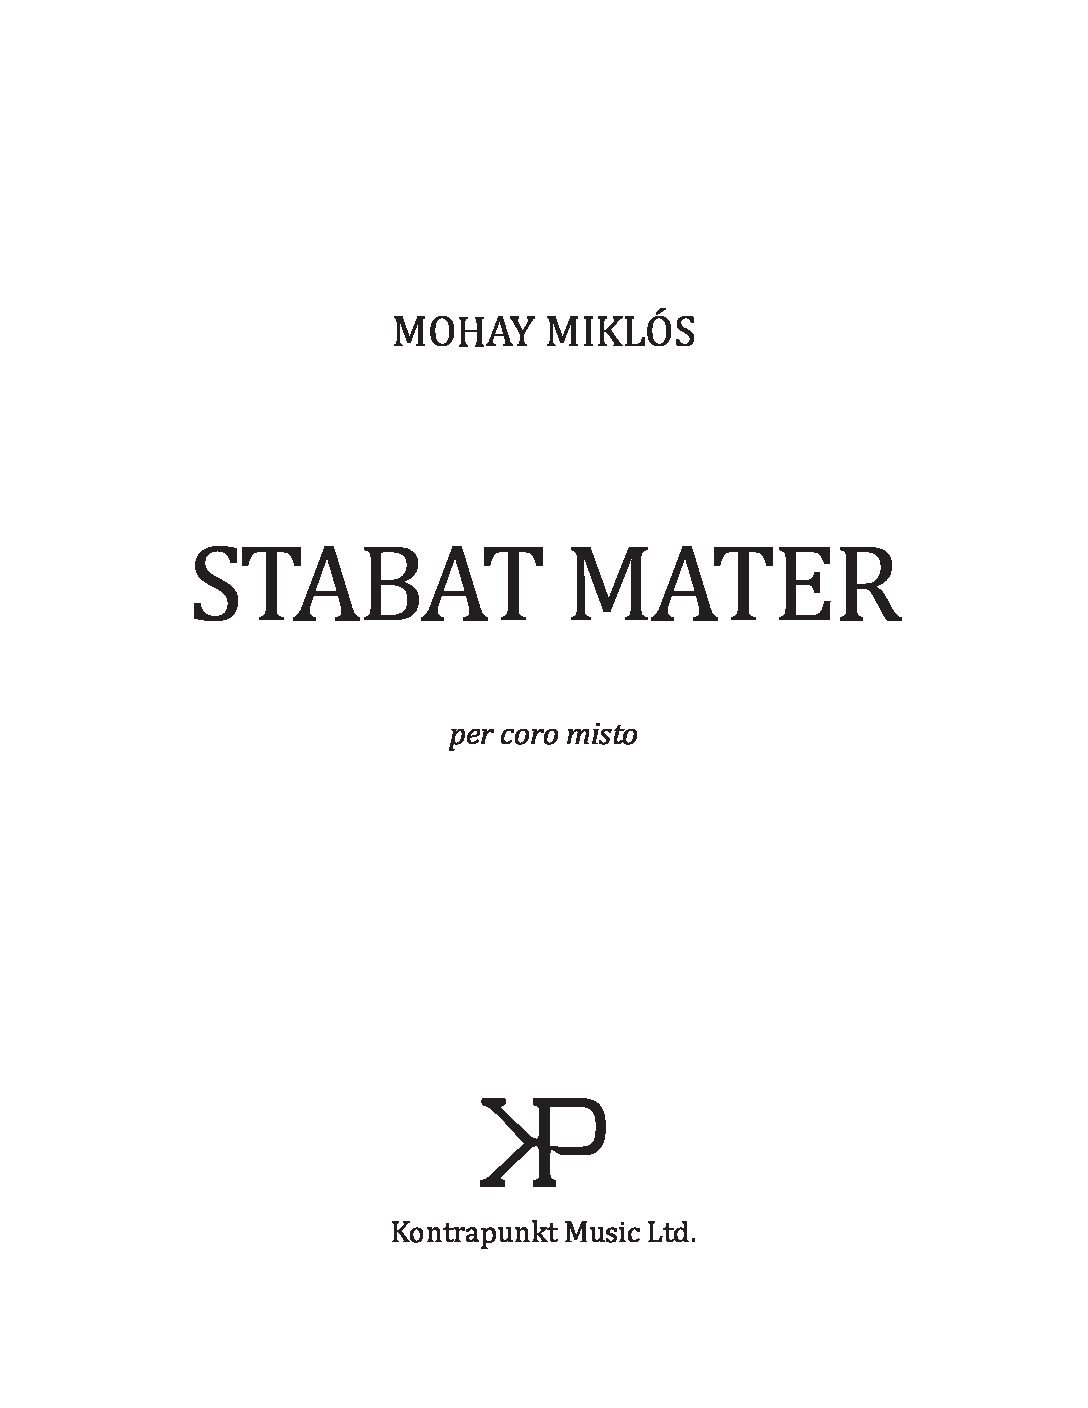 Mohay Miklós: Stabat Mater – per coro misto